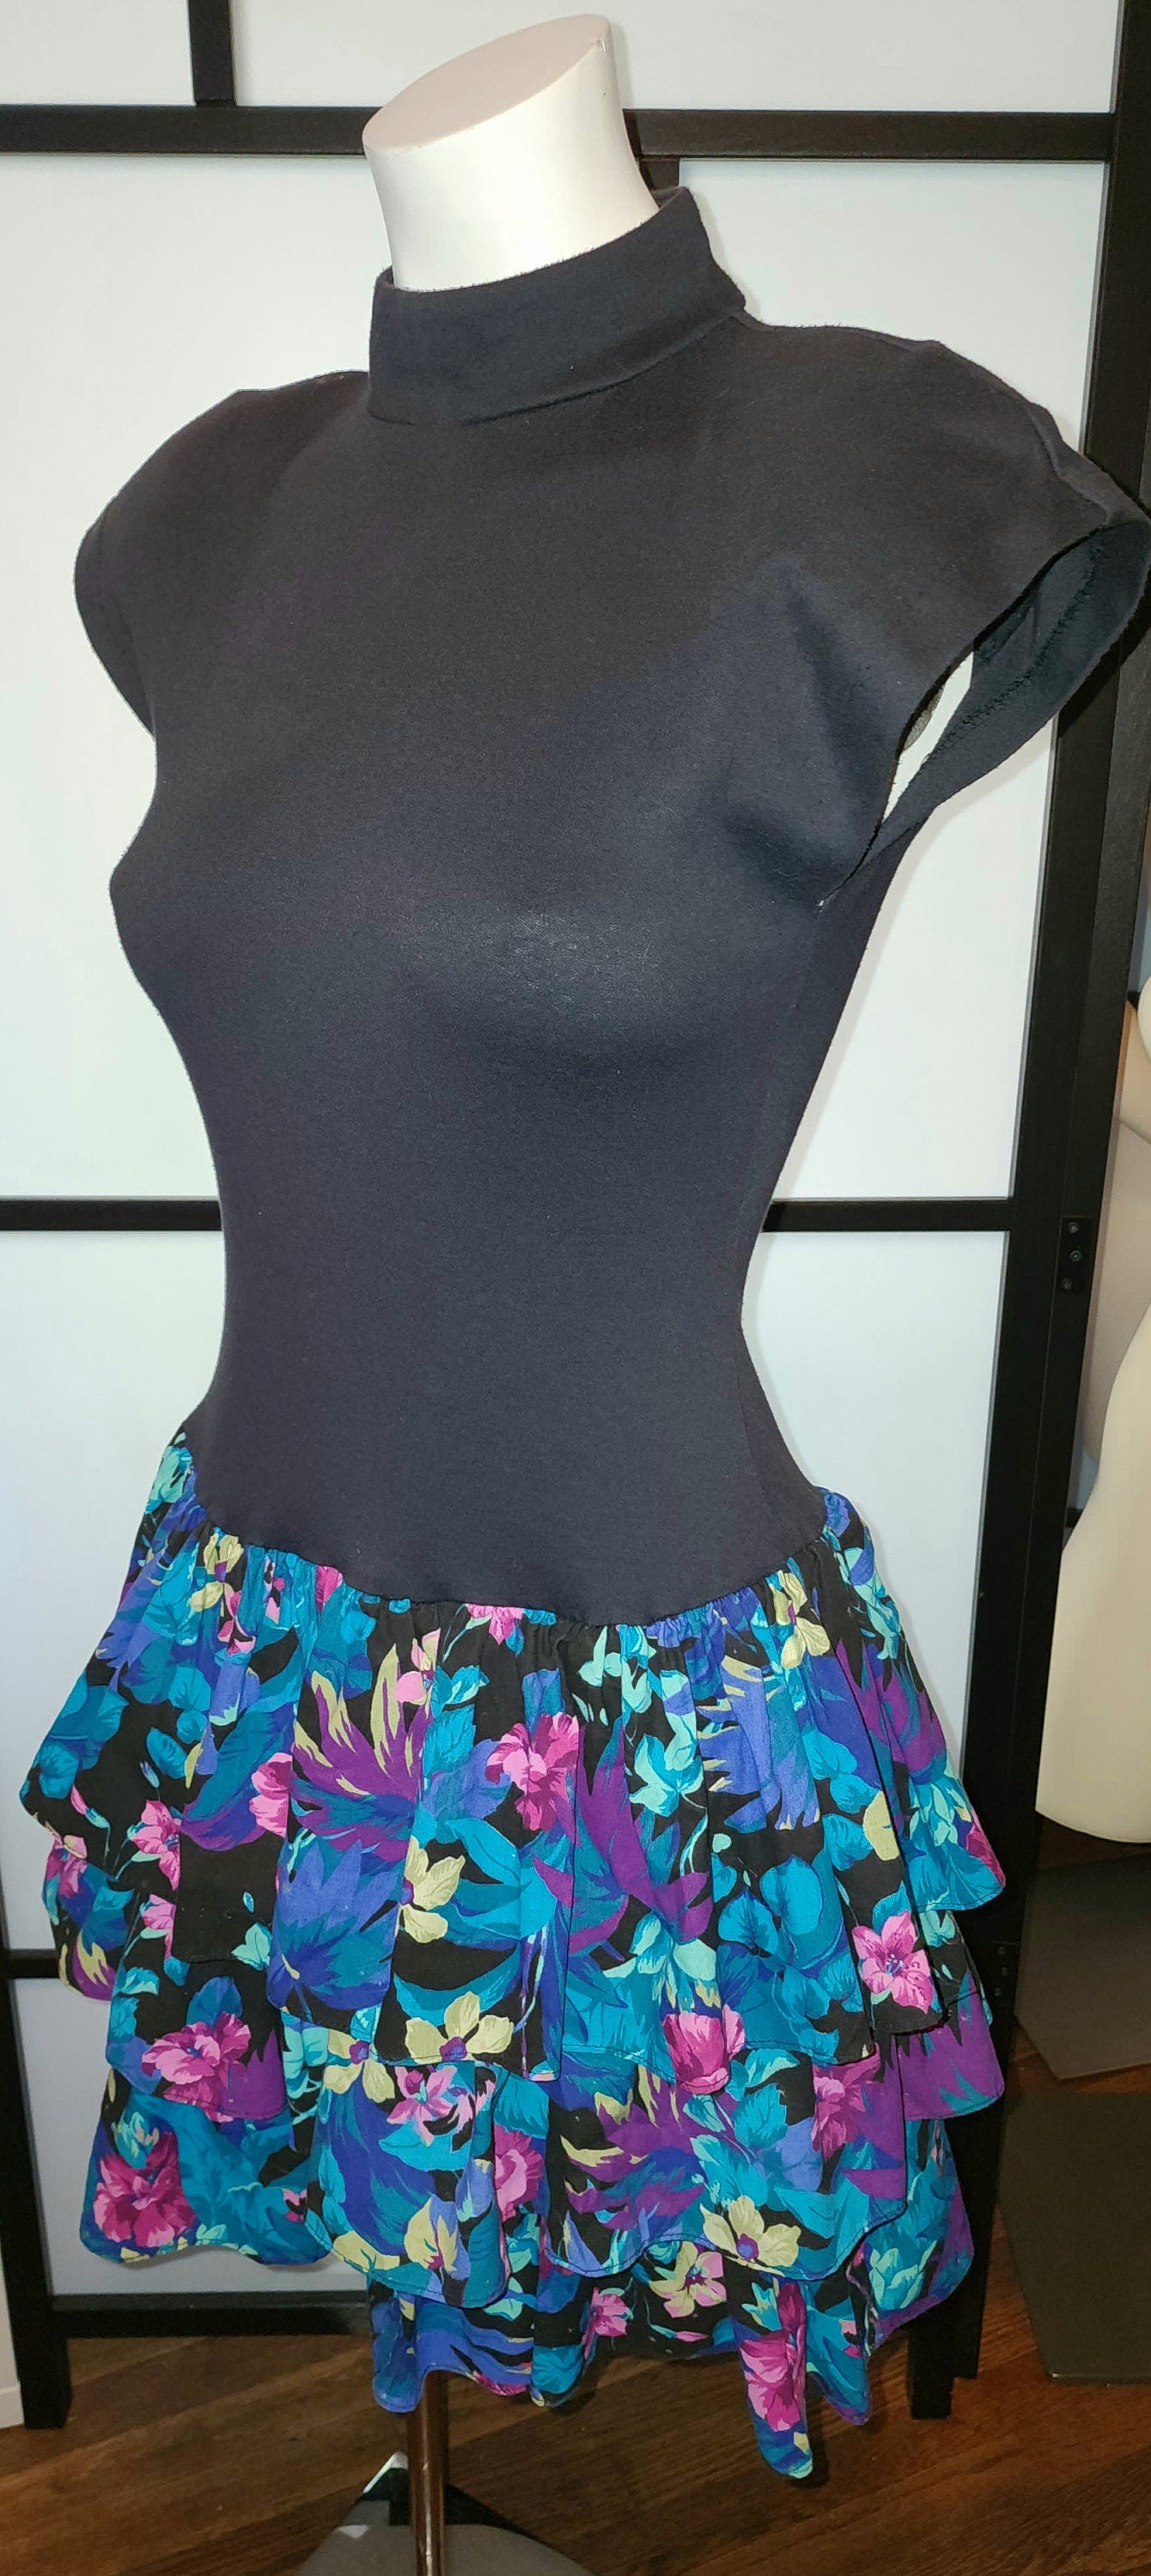 Vintage 1980s Dress Black Bodice Short Bright Patterned Ruffled Miniskirt All That Jazz New Wave Party Nightclub Boho S